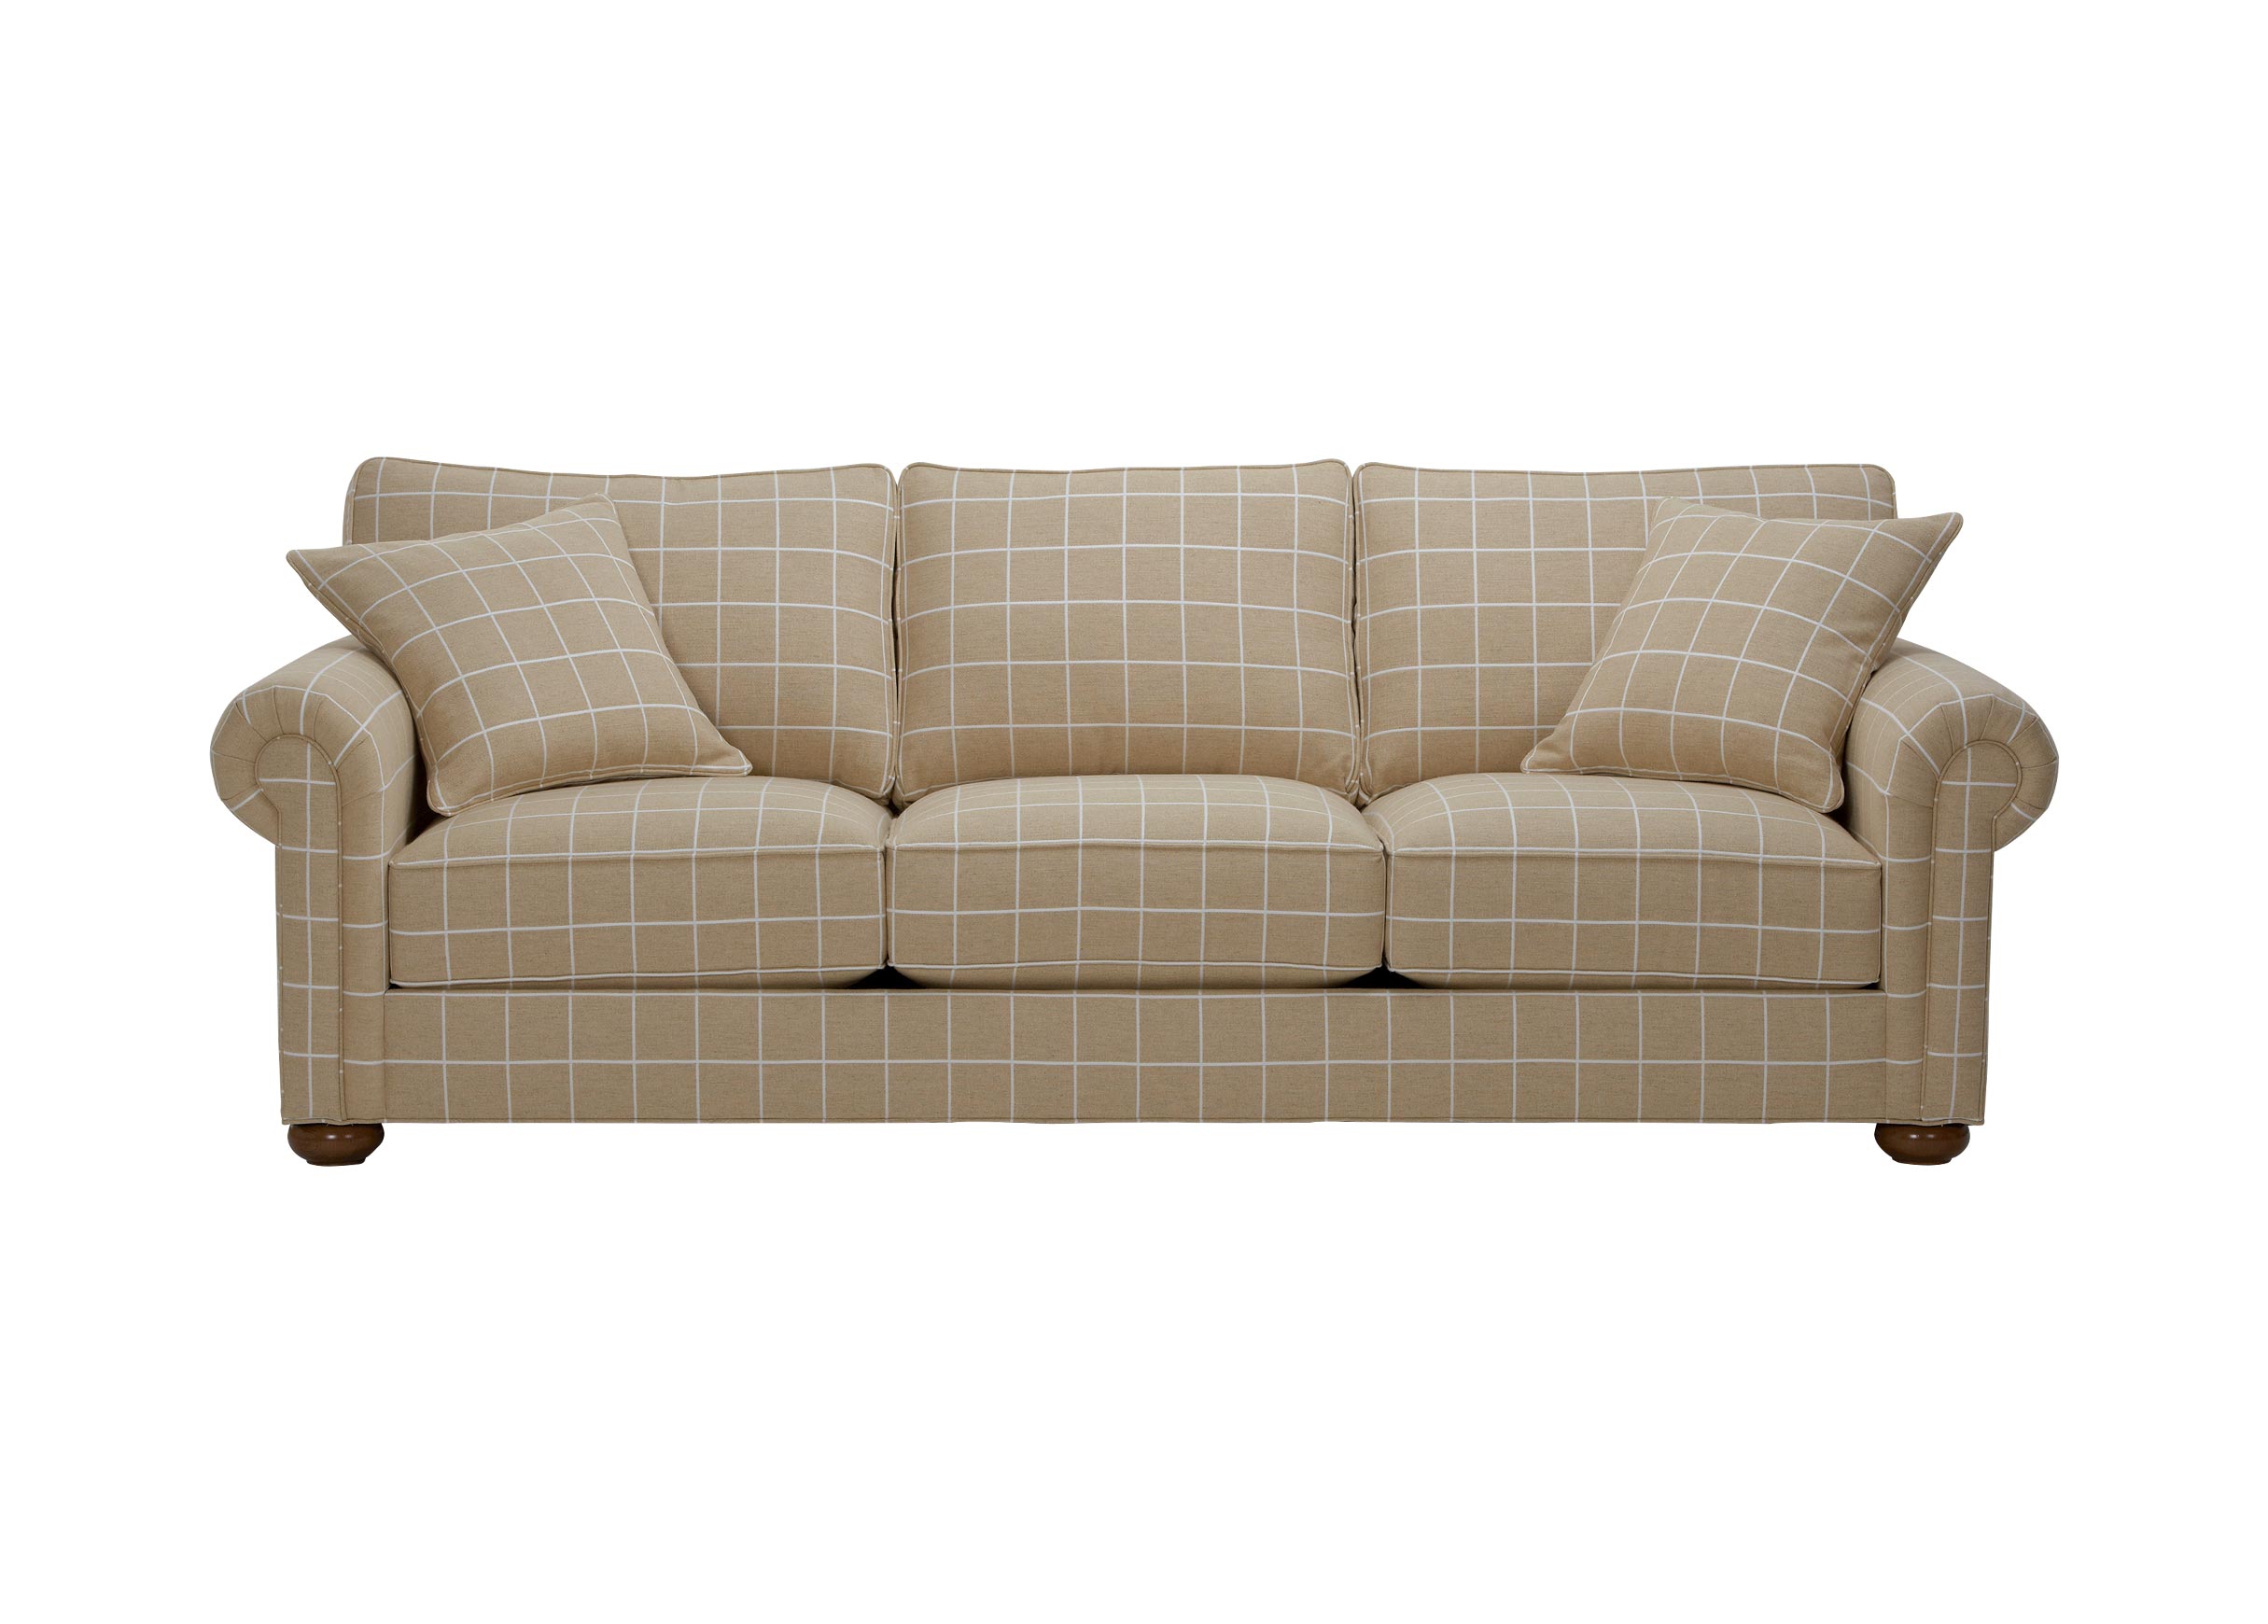 ethan allen richmond leather sofa